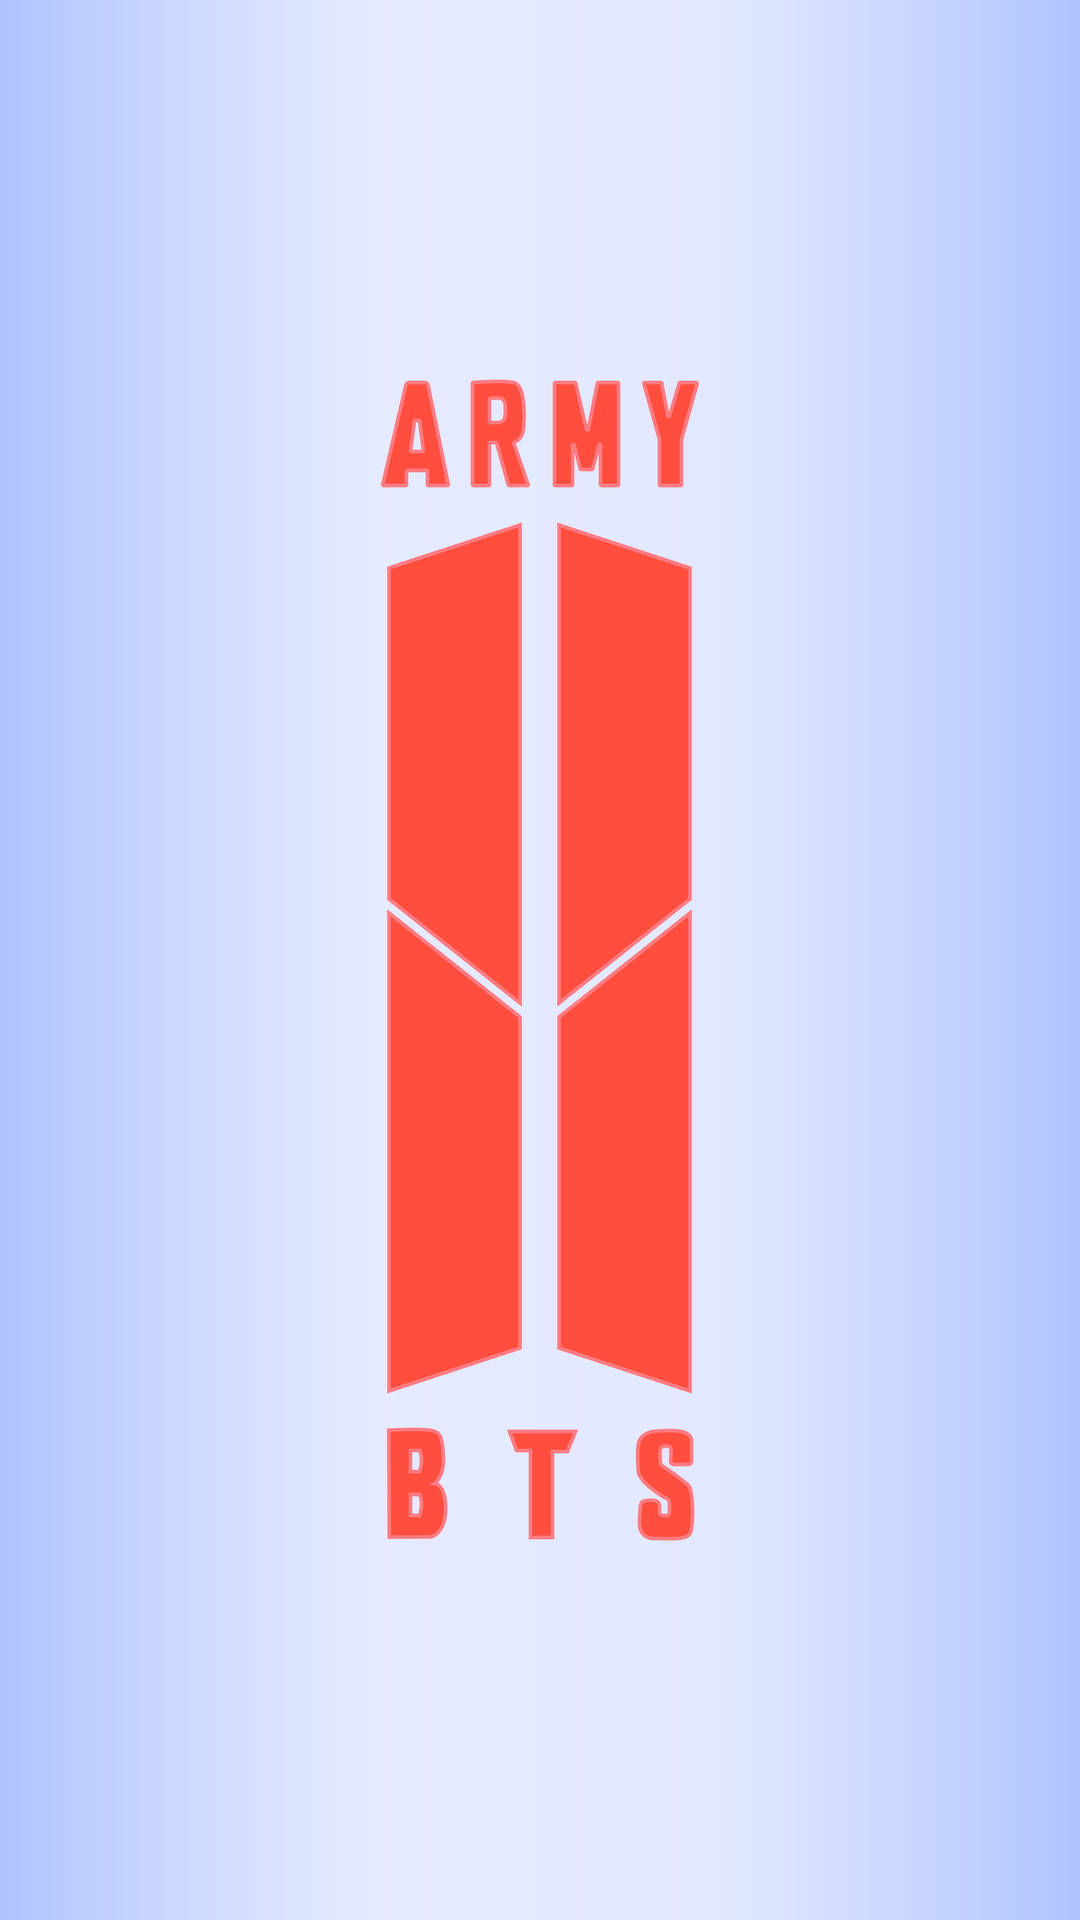 Orange Bts Army Emblem Background